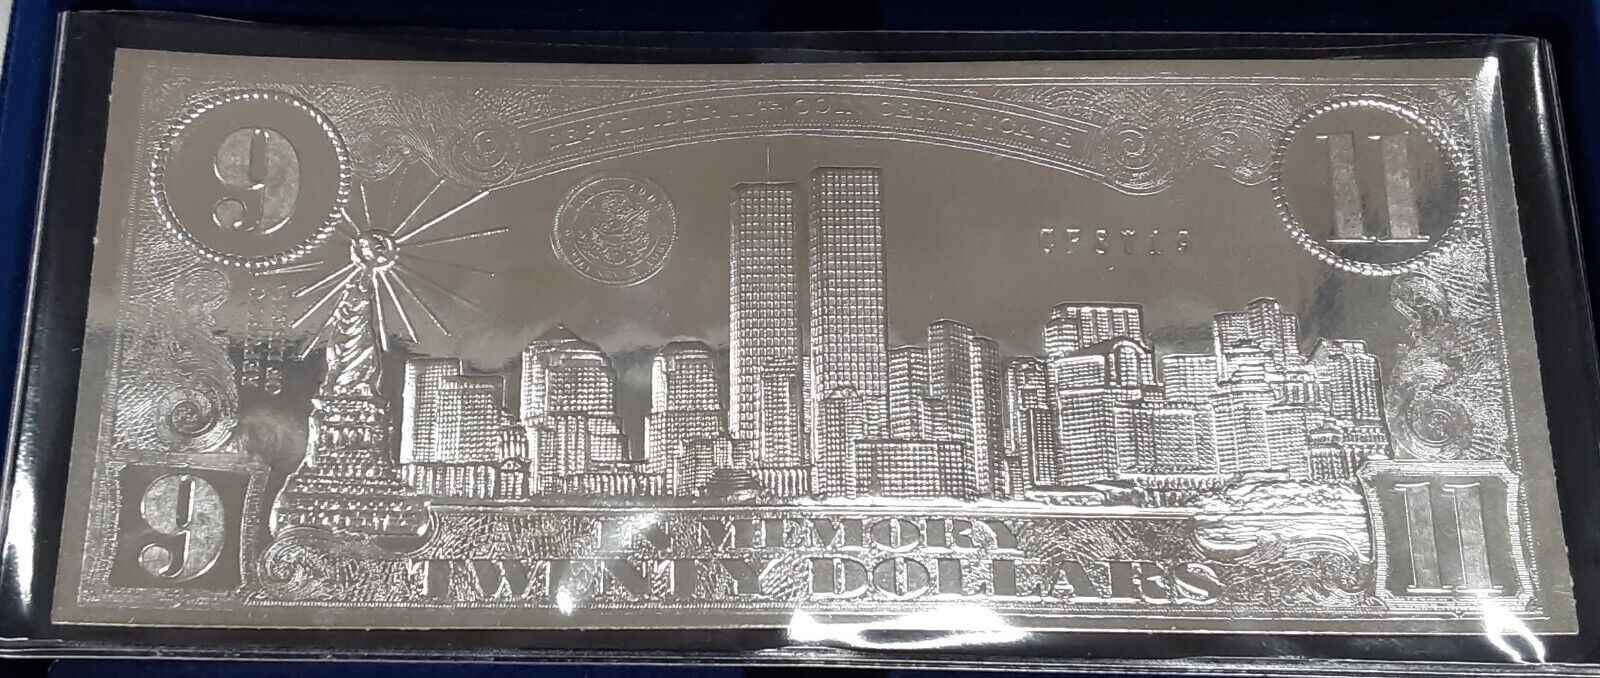 Republic of Liberia 9-11 Commemorative Silver Plated Note in Plastic Sleeve